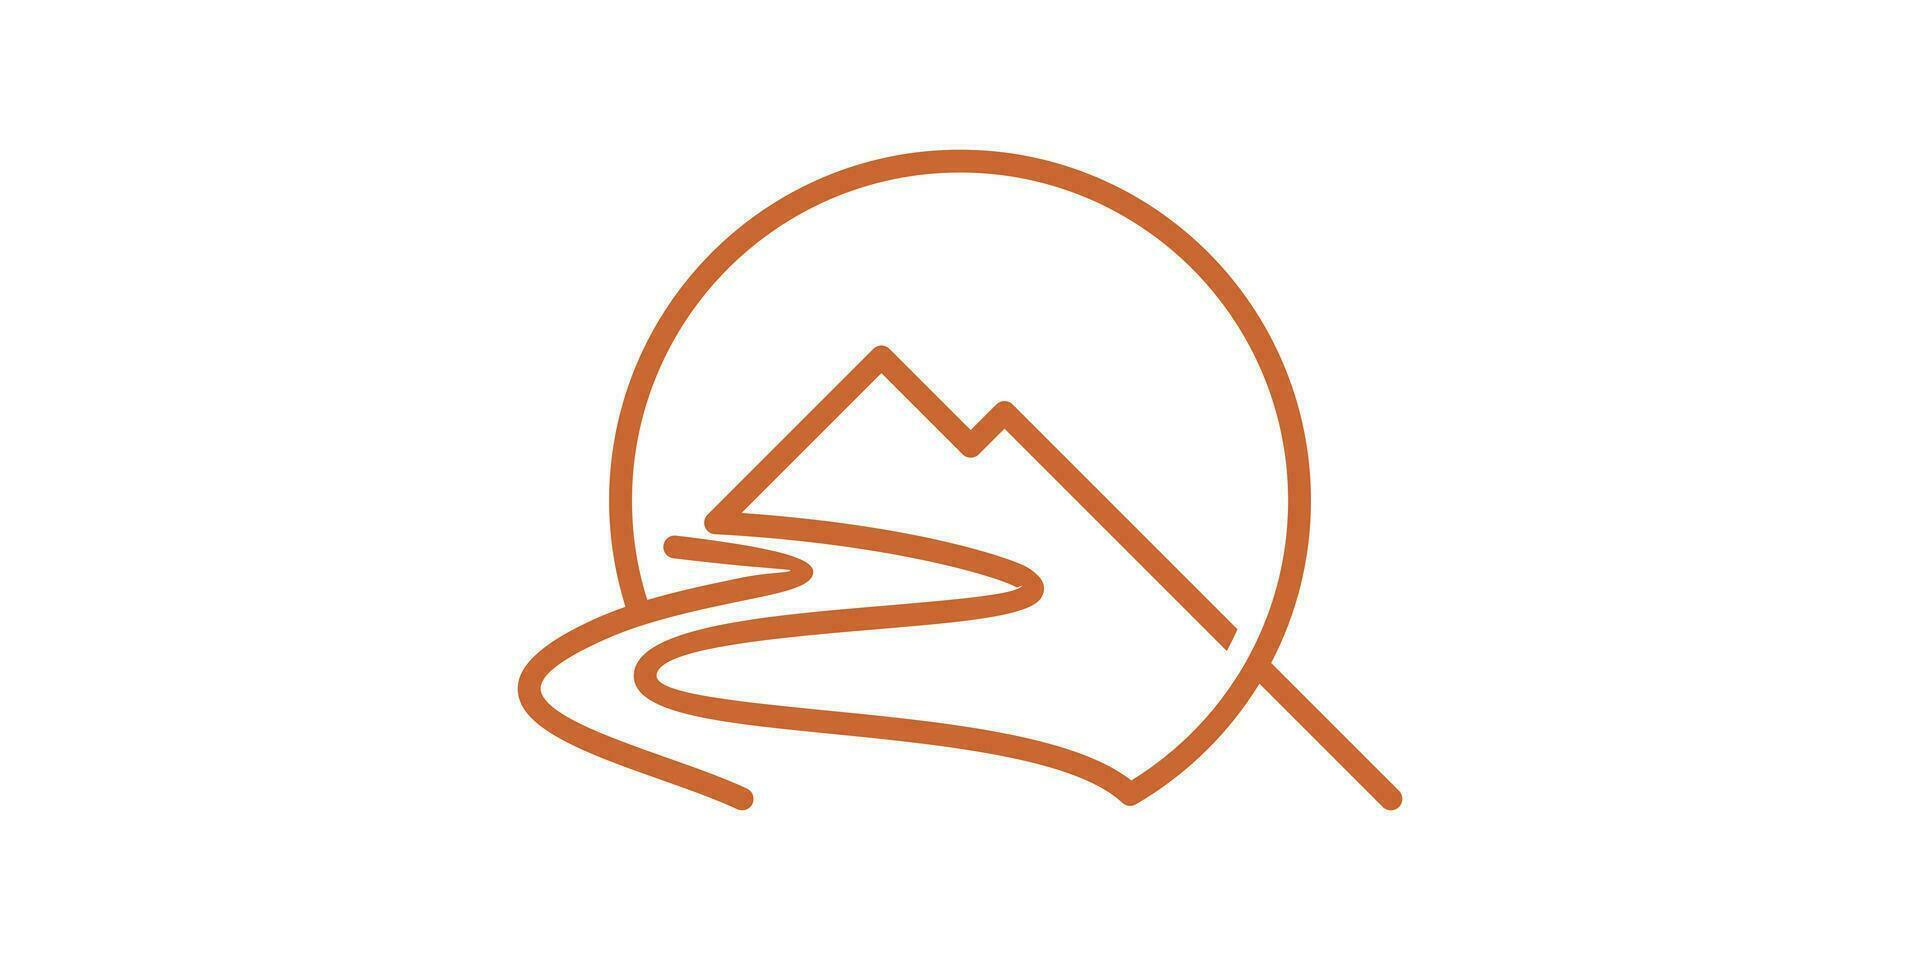 minimalista montaña logo diseño, línea diseño, sencillo logo. vector